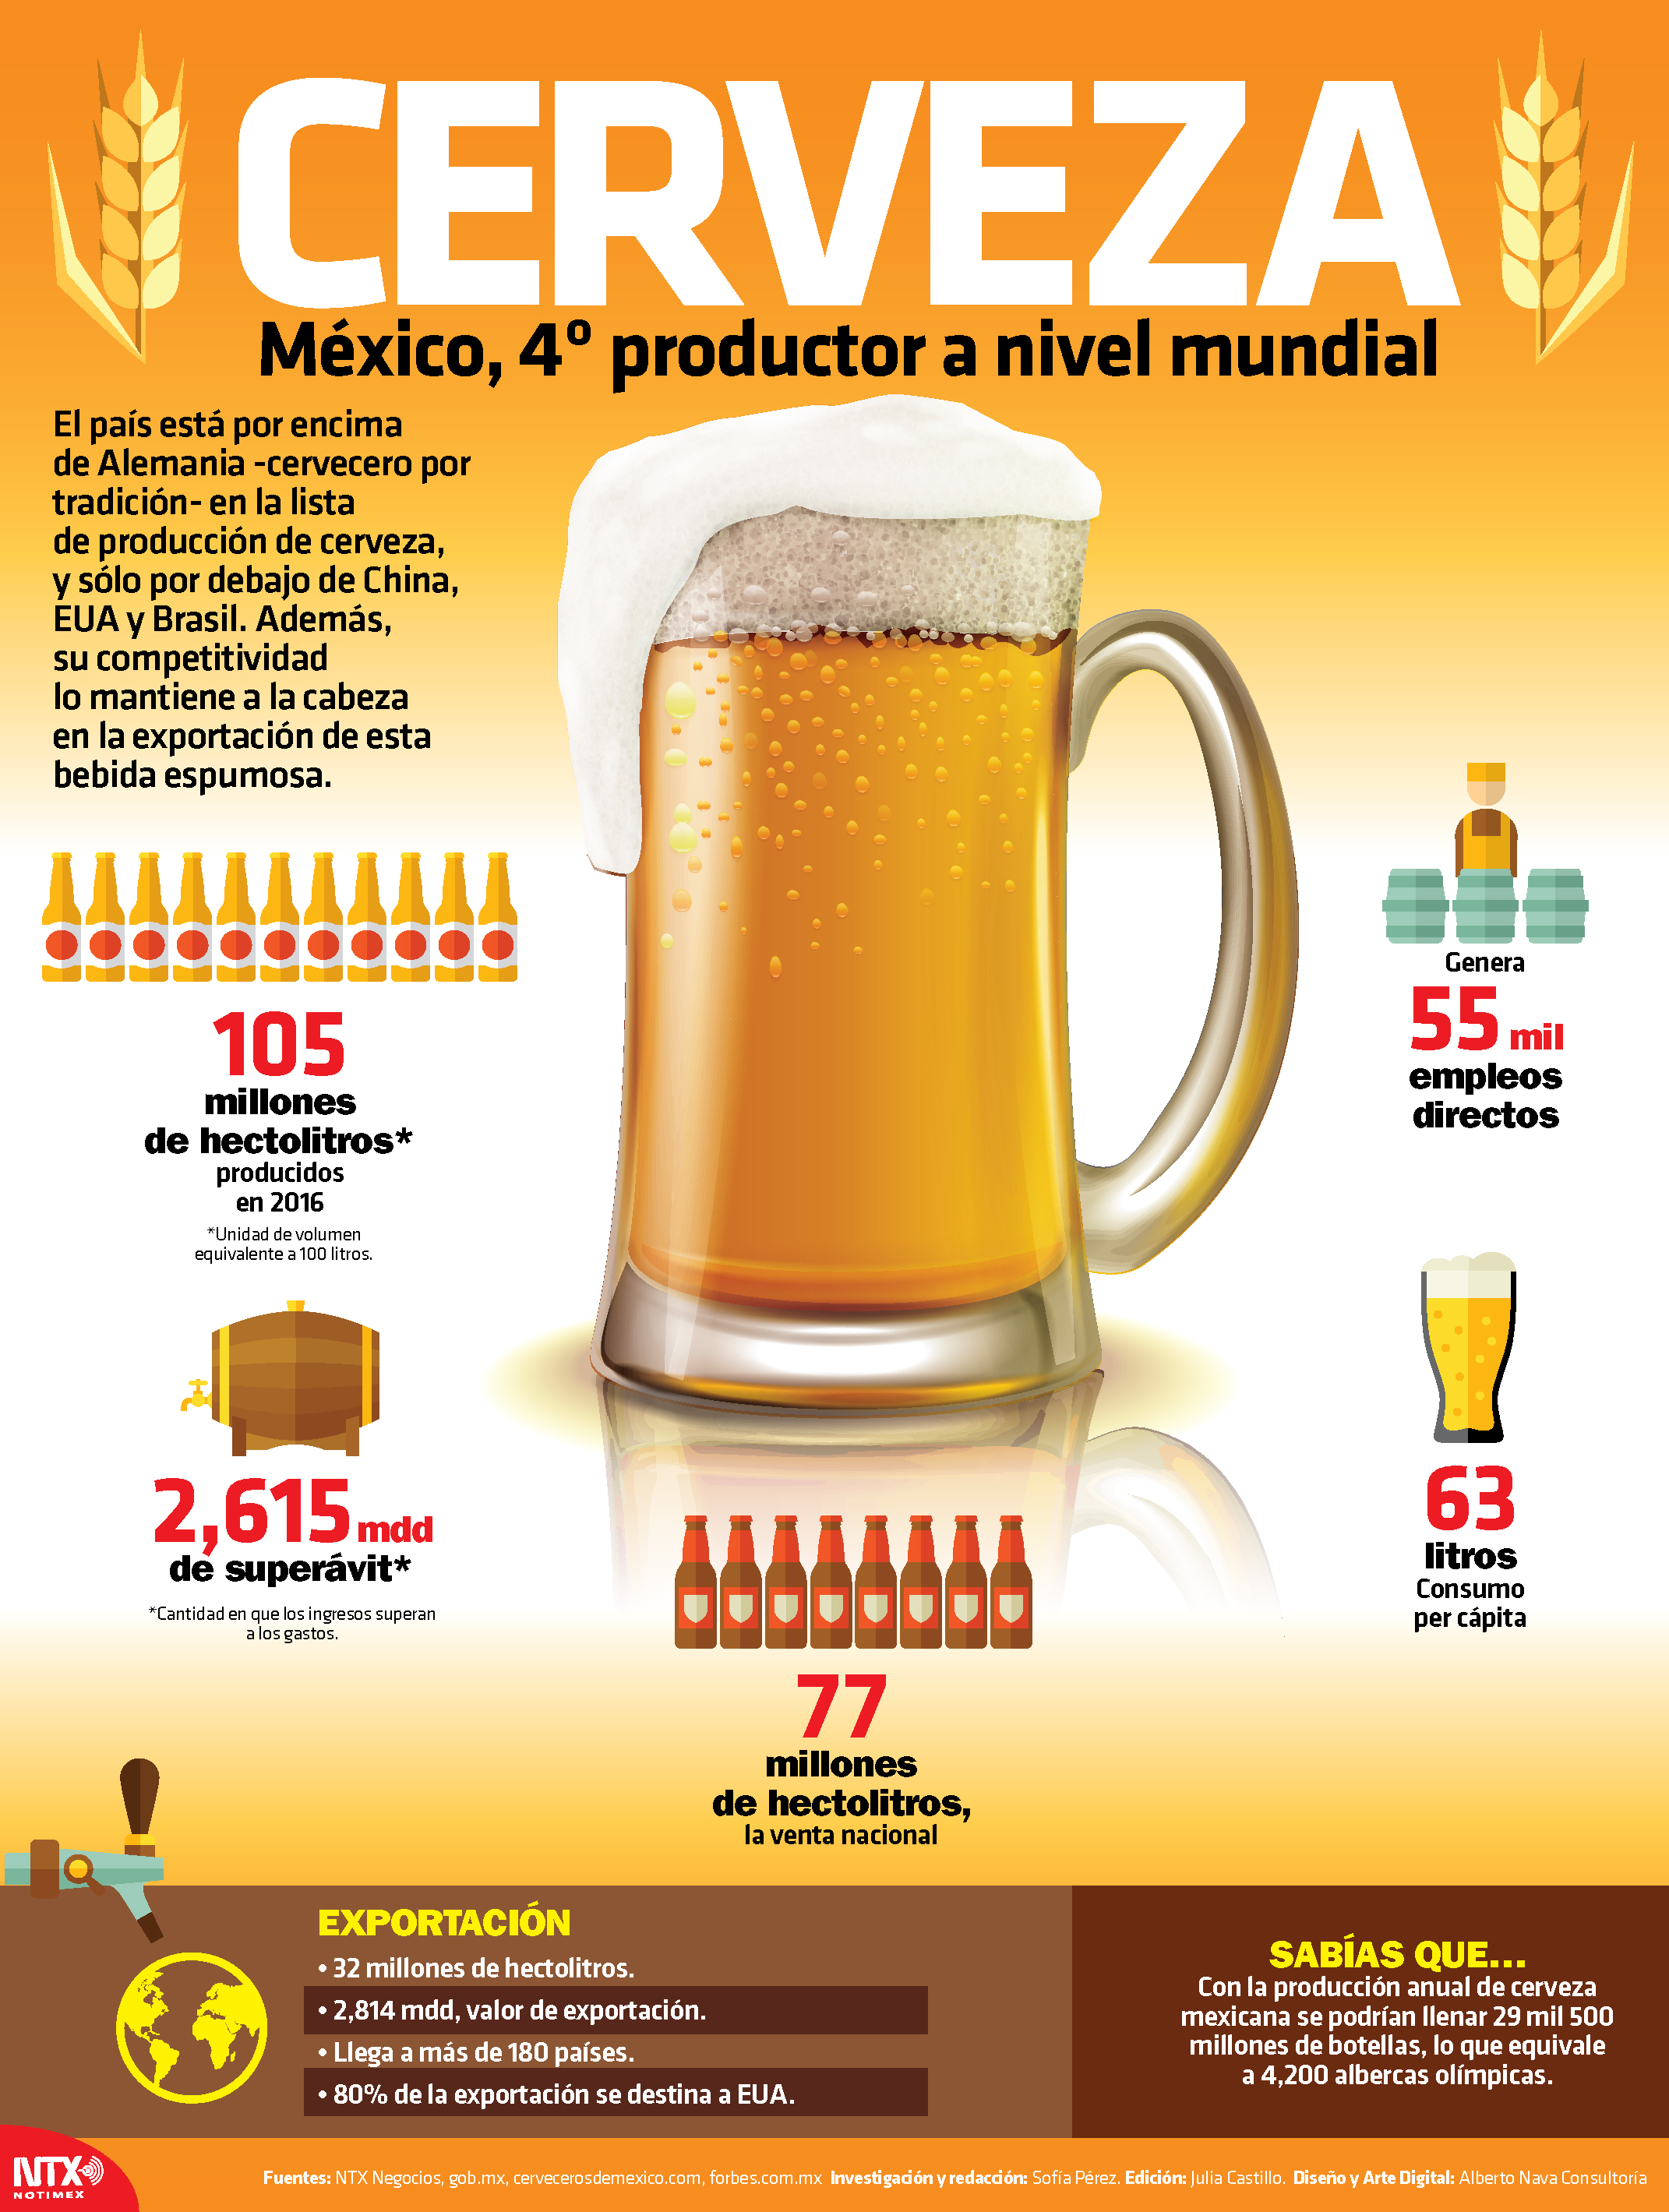 México, 4 lugar productor de cerveza